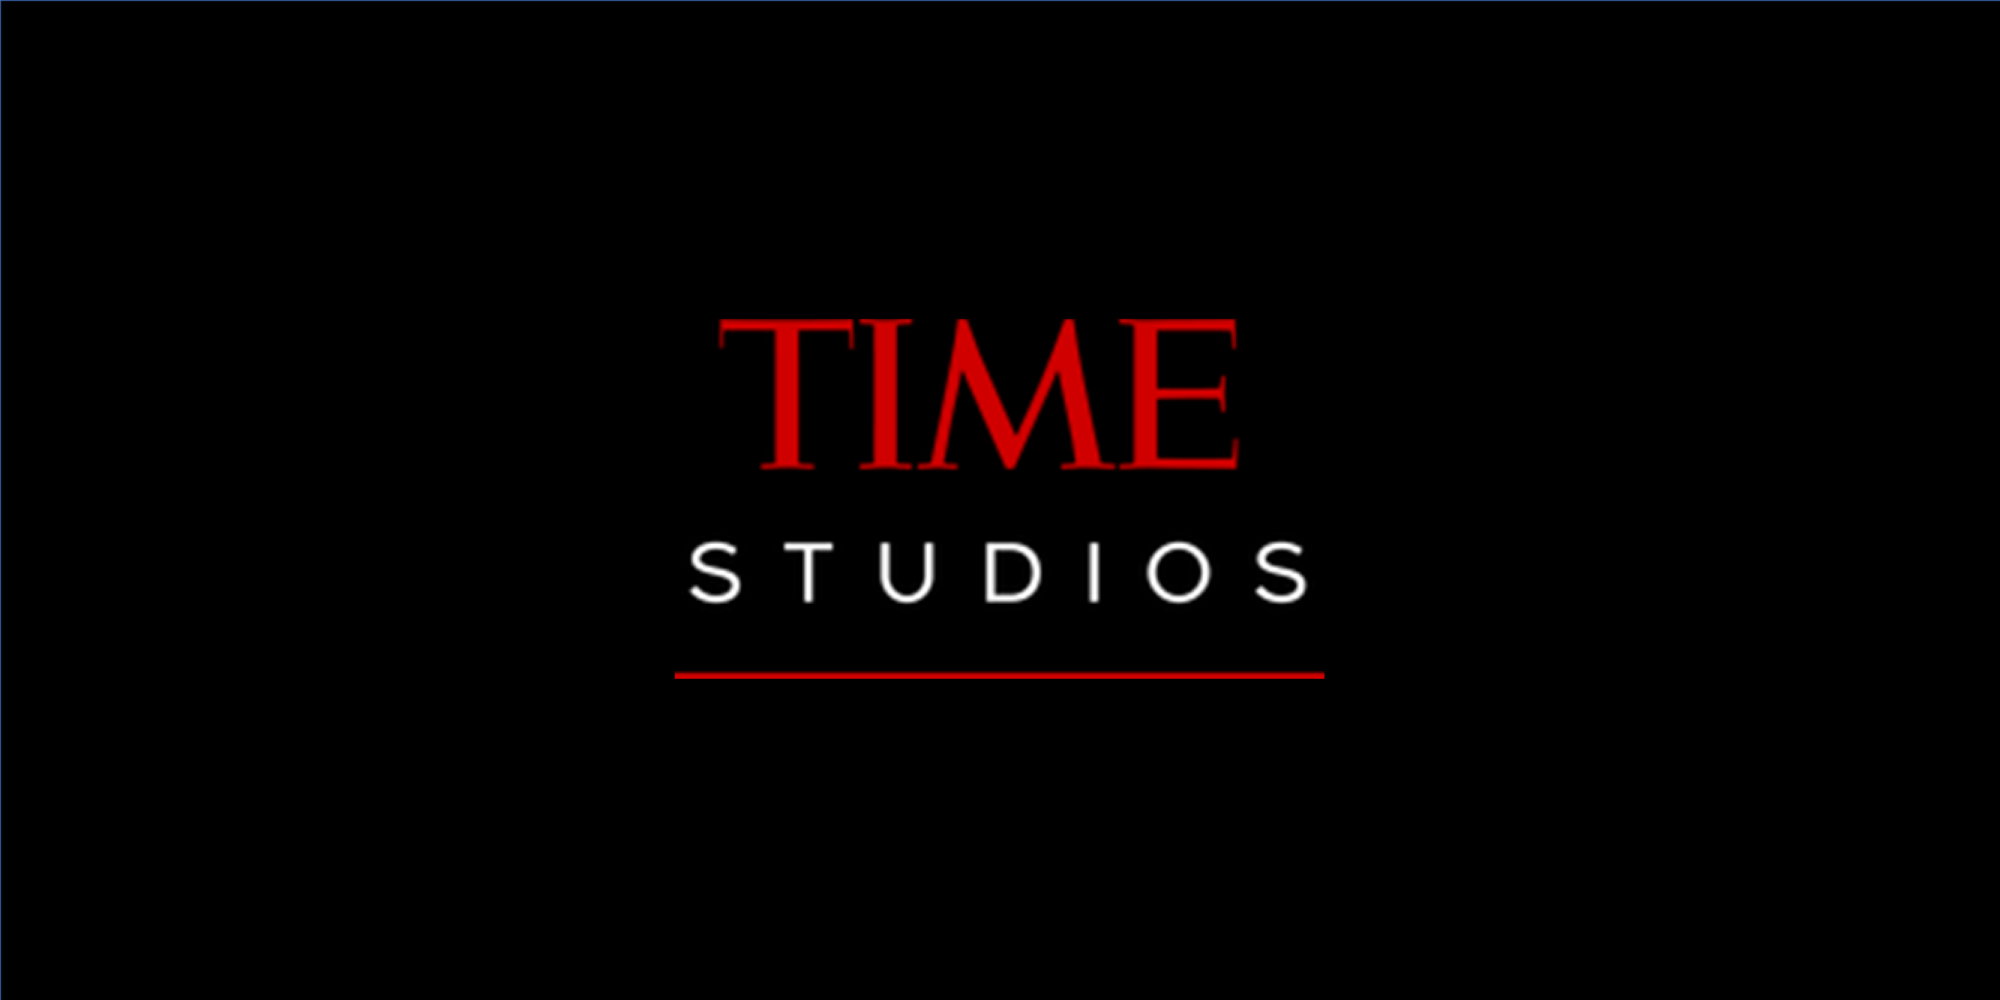 TIME Studios Social Image (1)